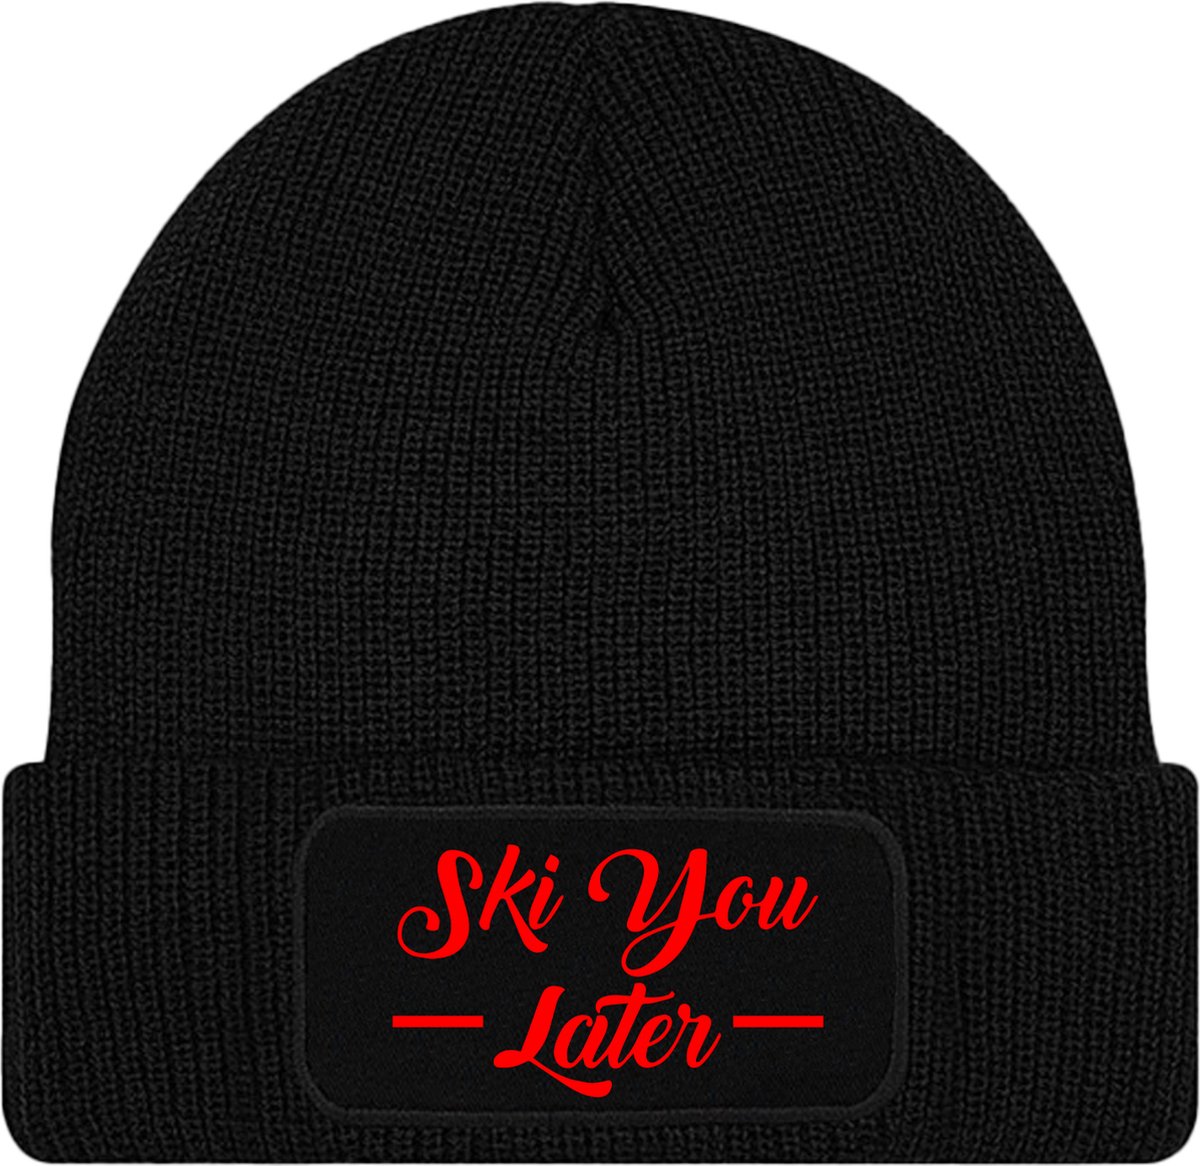 SKI YOU LATER muts - Zwart met rood - Beanie - One Size - Uniseks - Grappige teksten | Designs - Original Kwoots - Wintersport - Aprés ski muts - Ja Toch